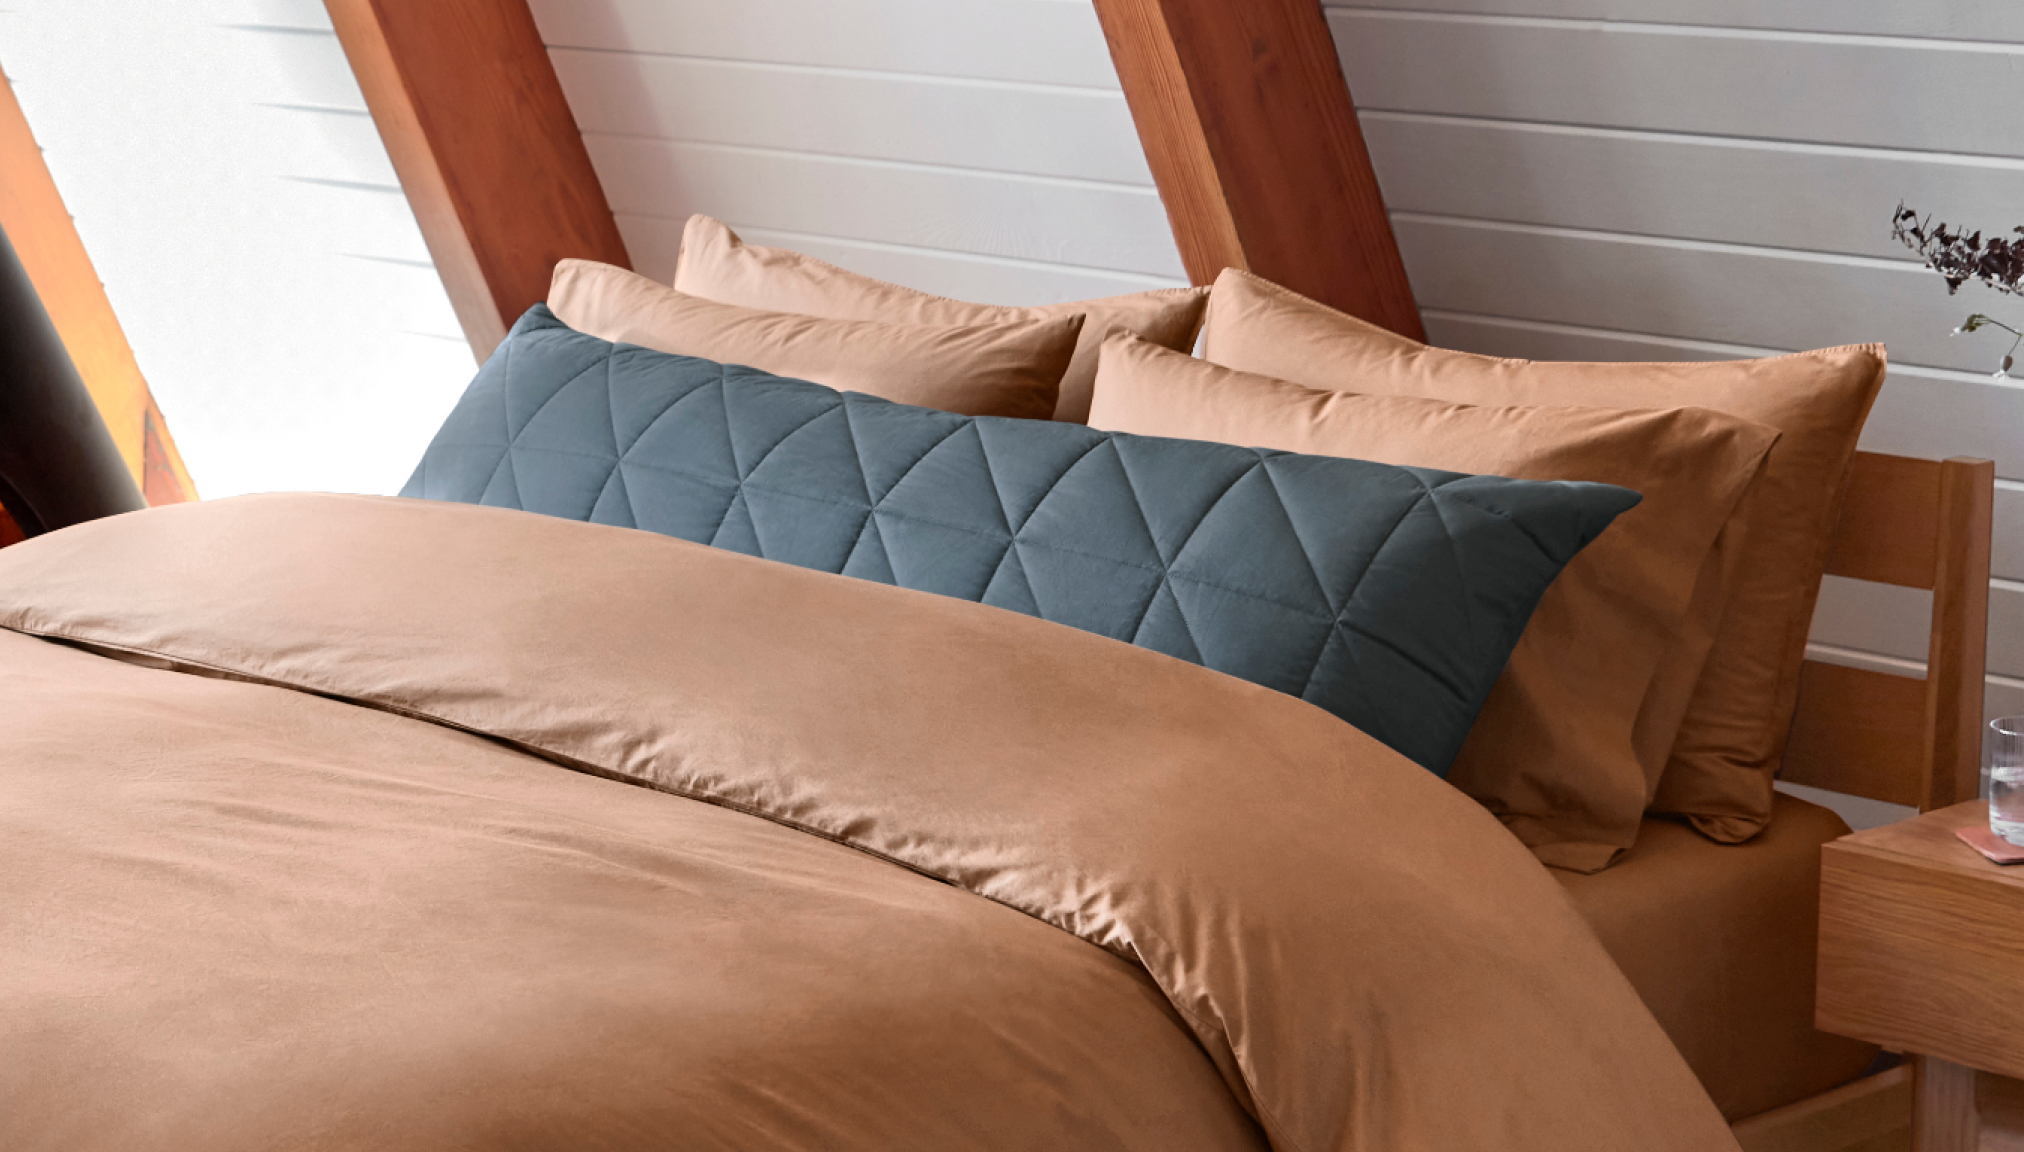 Details about   Maple Tree Pillow Sham Decorative Pillowcase 3 Sizes for Bedroom Decor 